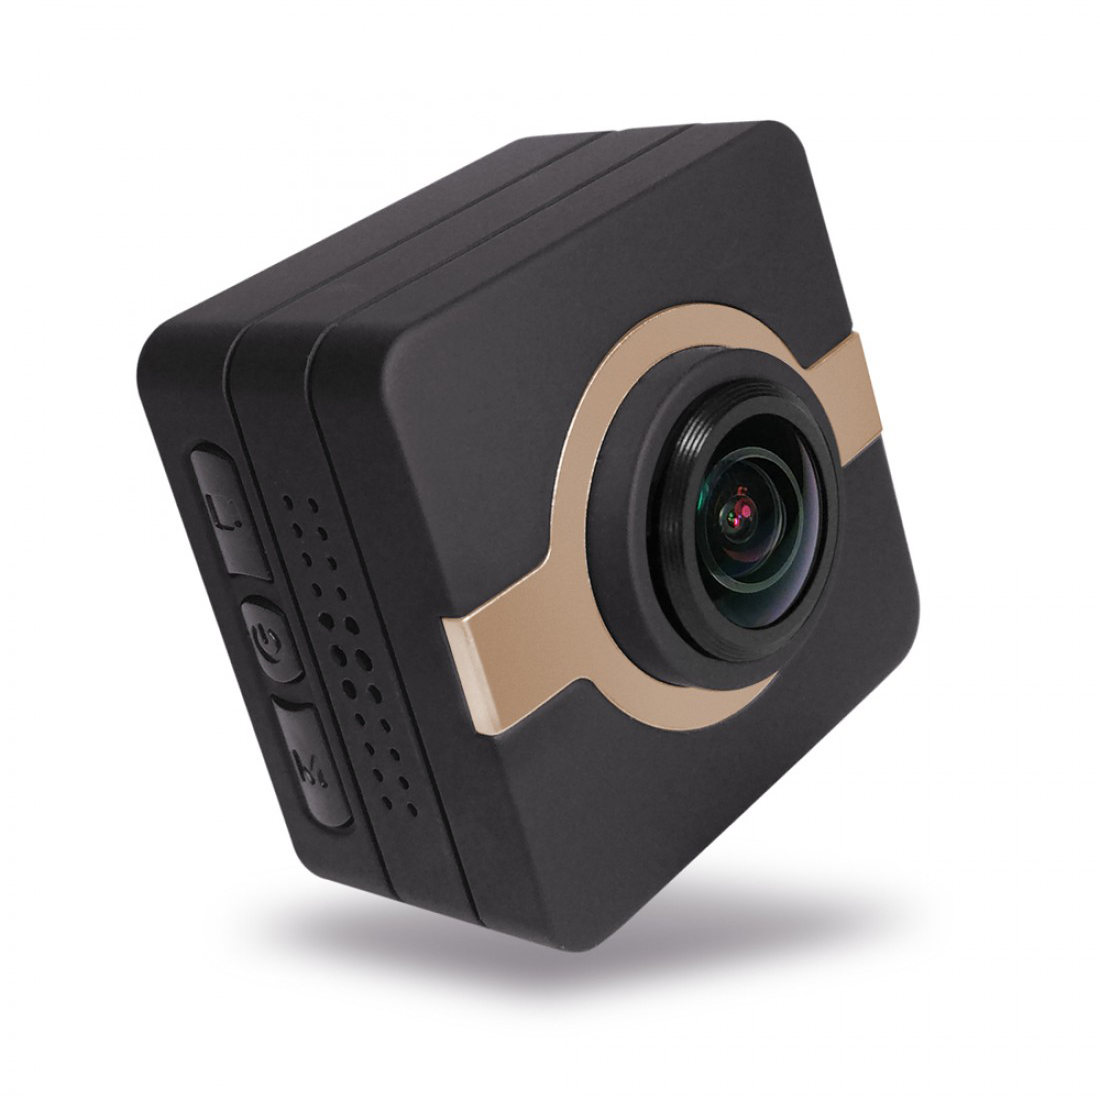 Matecam X1 Mini Action Camera Car Dashboard Camera Cam recorder 4K-HI Ultra HD Waterproof DV Camcorder 16MP 160 Degree Wide Angle WIFI/G-Sensor/Gyro Stabilization/Motion Detection/Remote control Mini DVR car keys micro RC cam Bike Helmet Cam สีน้ำตาล